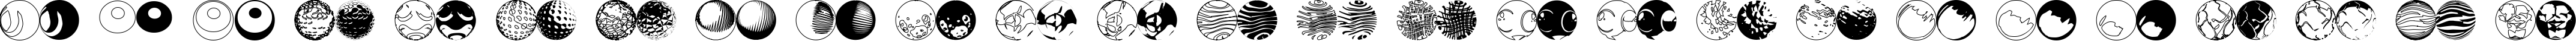 Пример написания английского алфавита шрифтом 52 Sphereoids